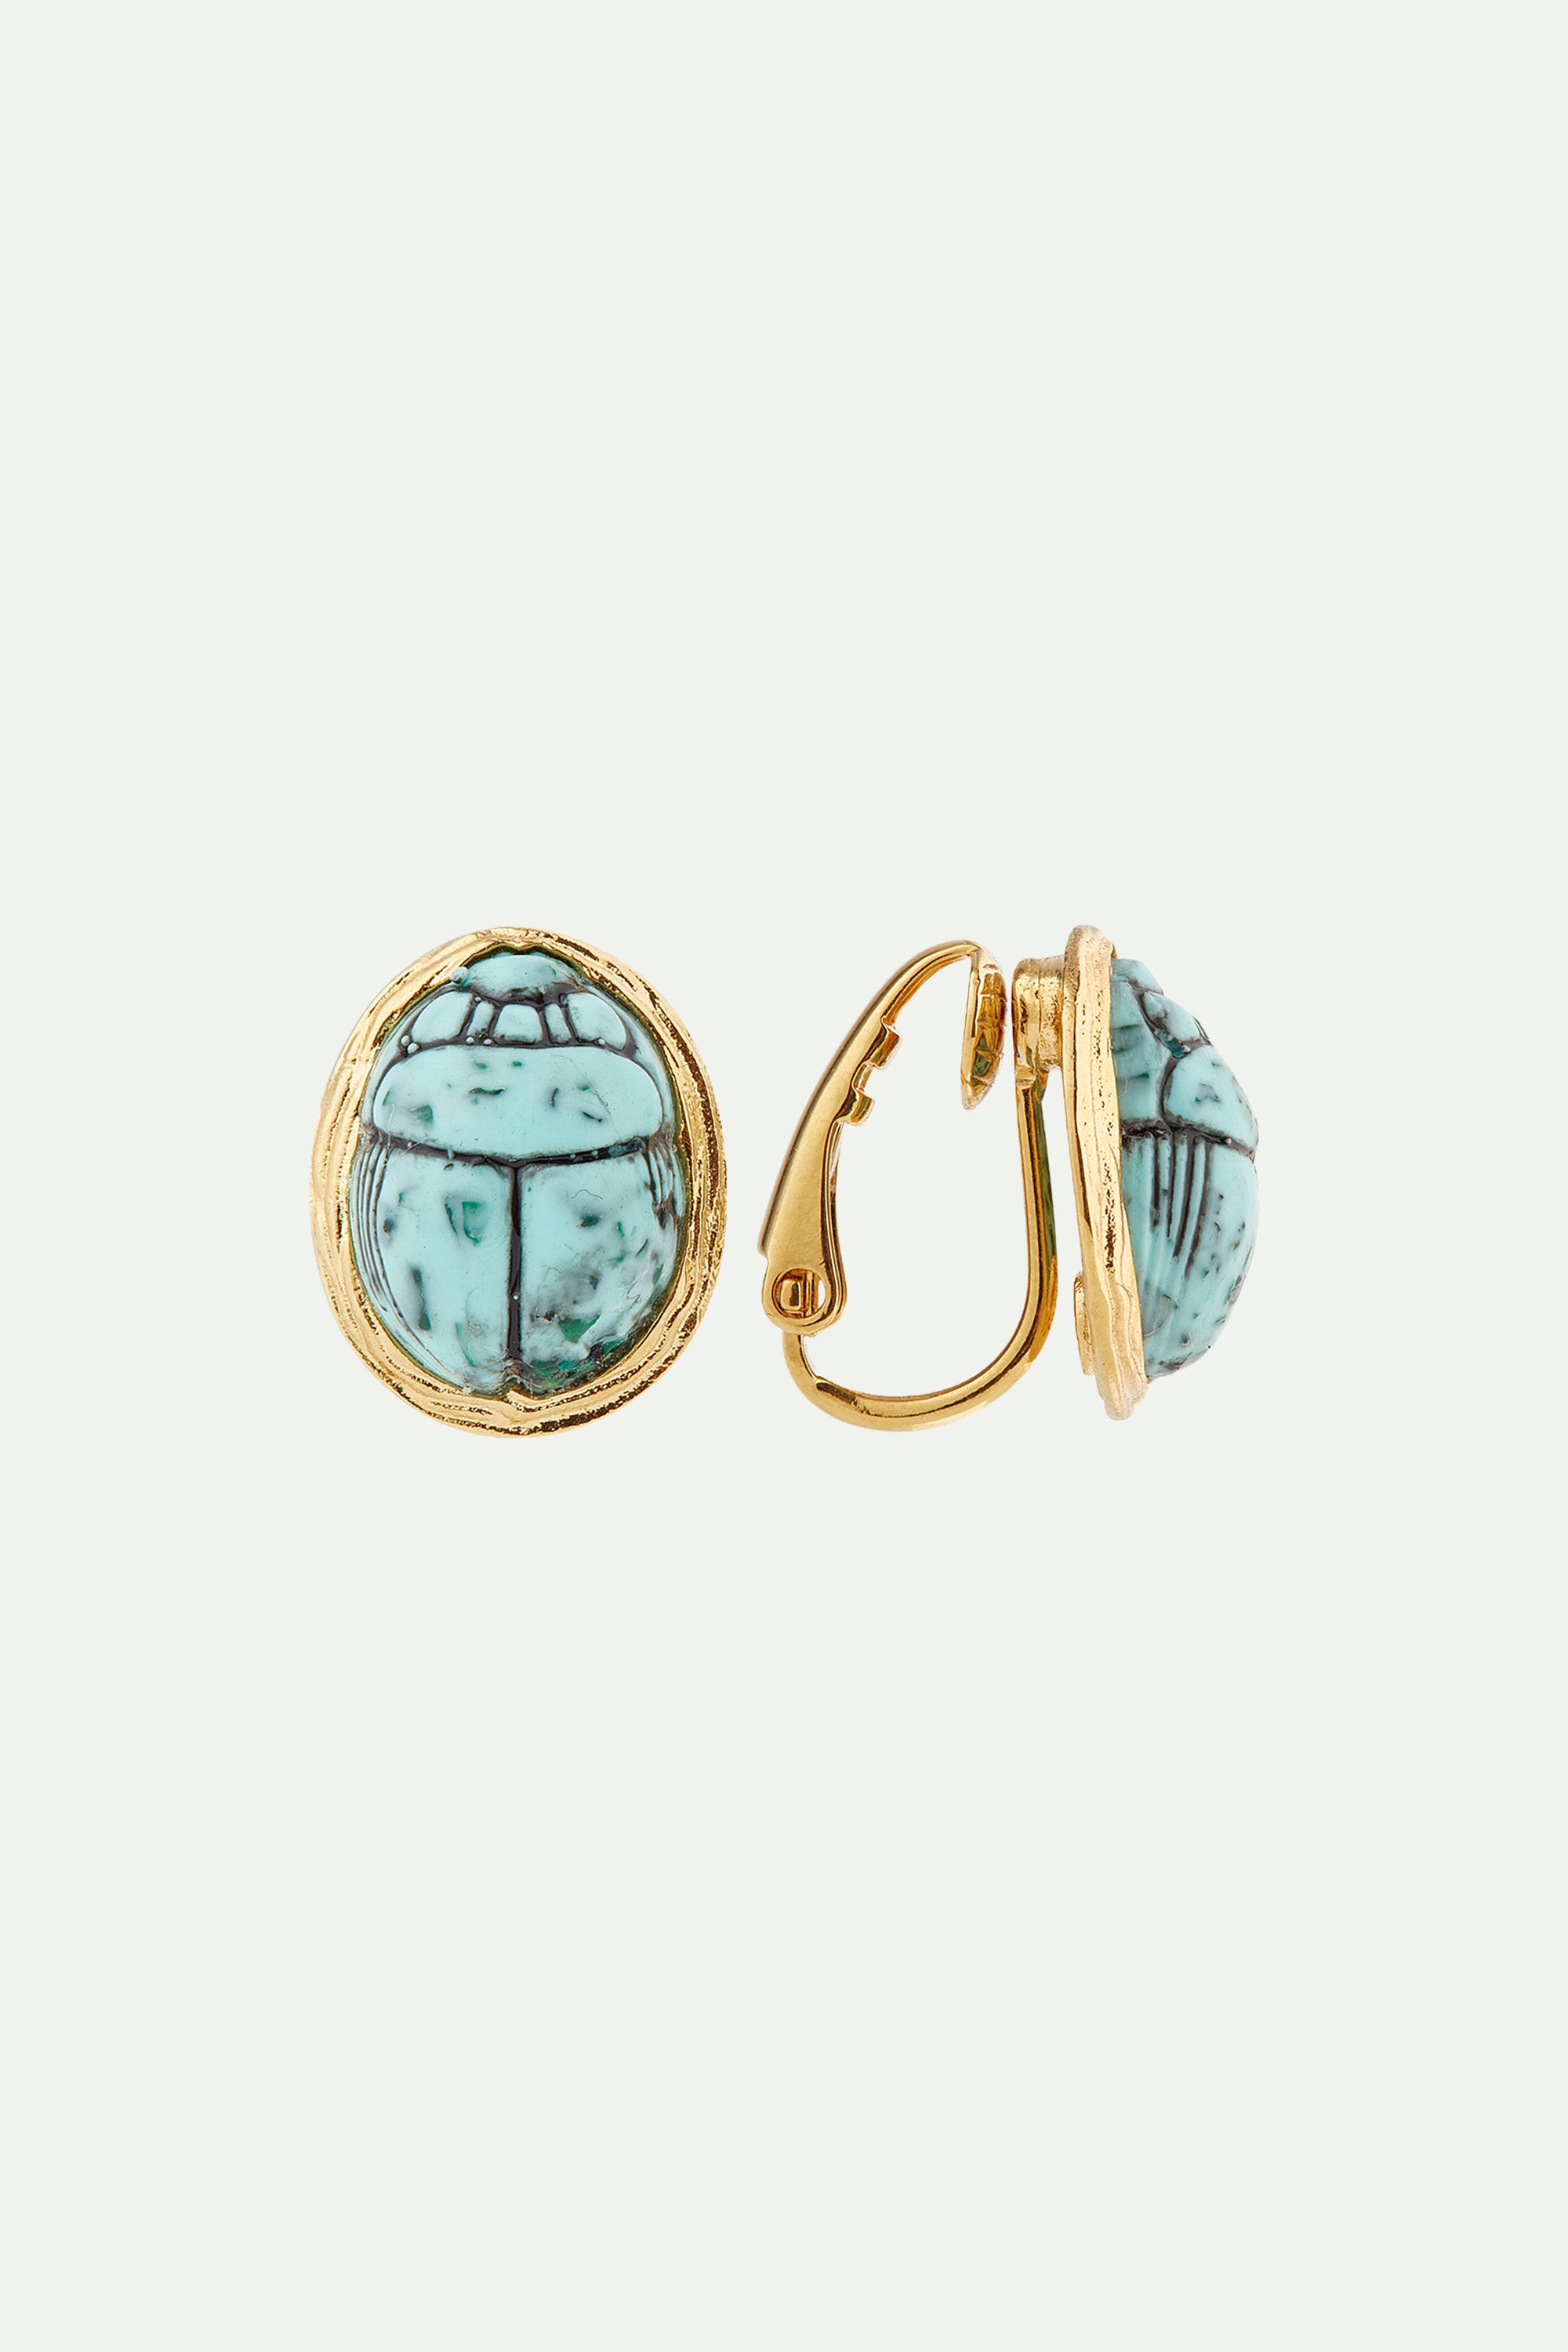 Turquoise scarab beetle clip-on earrings